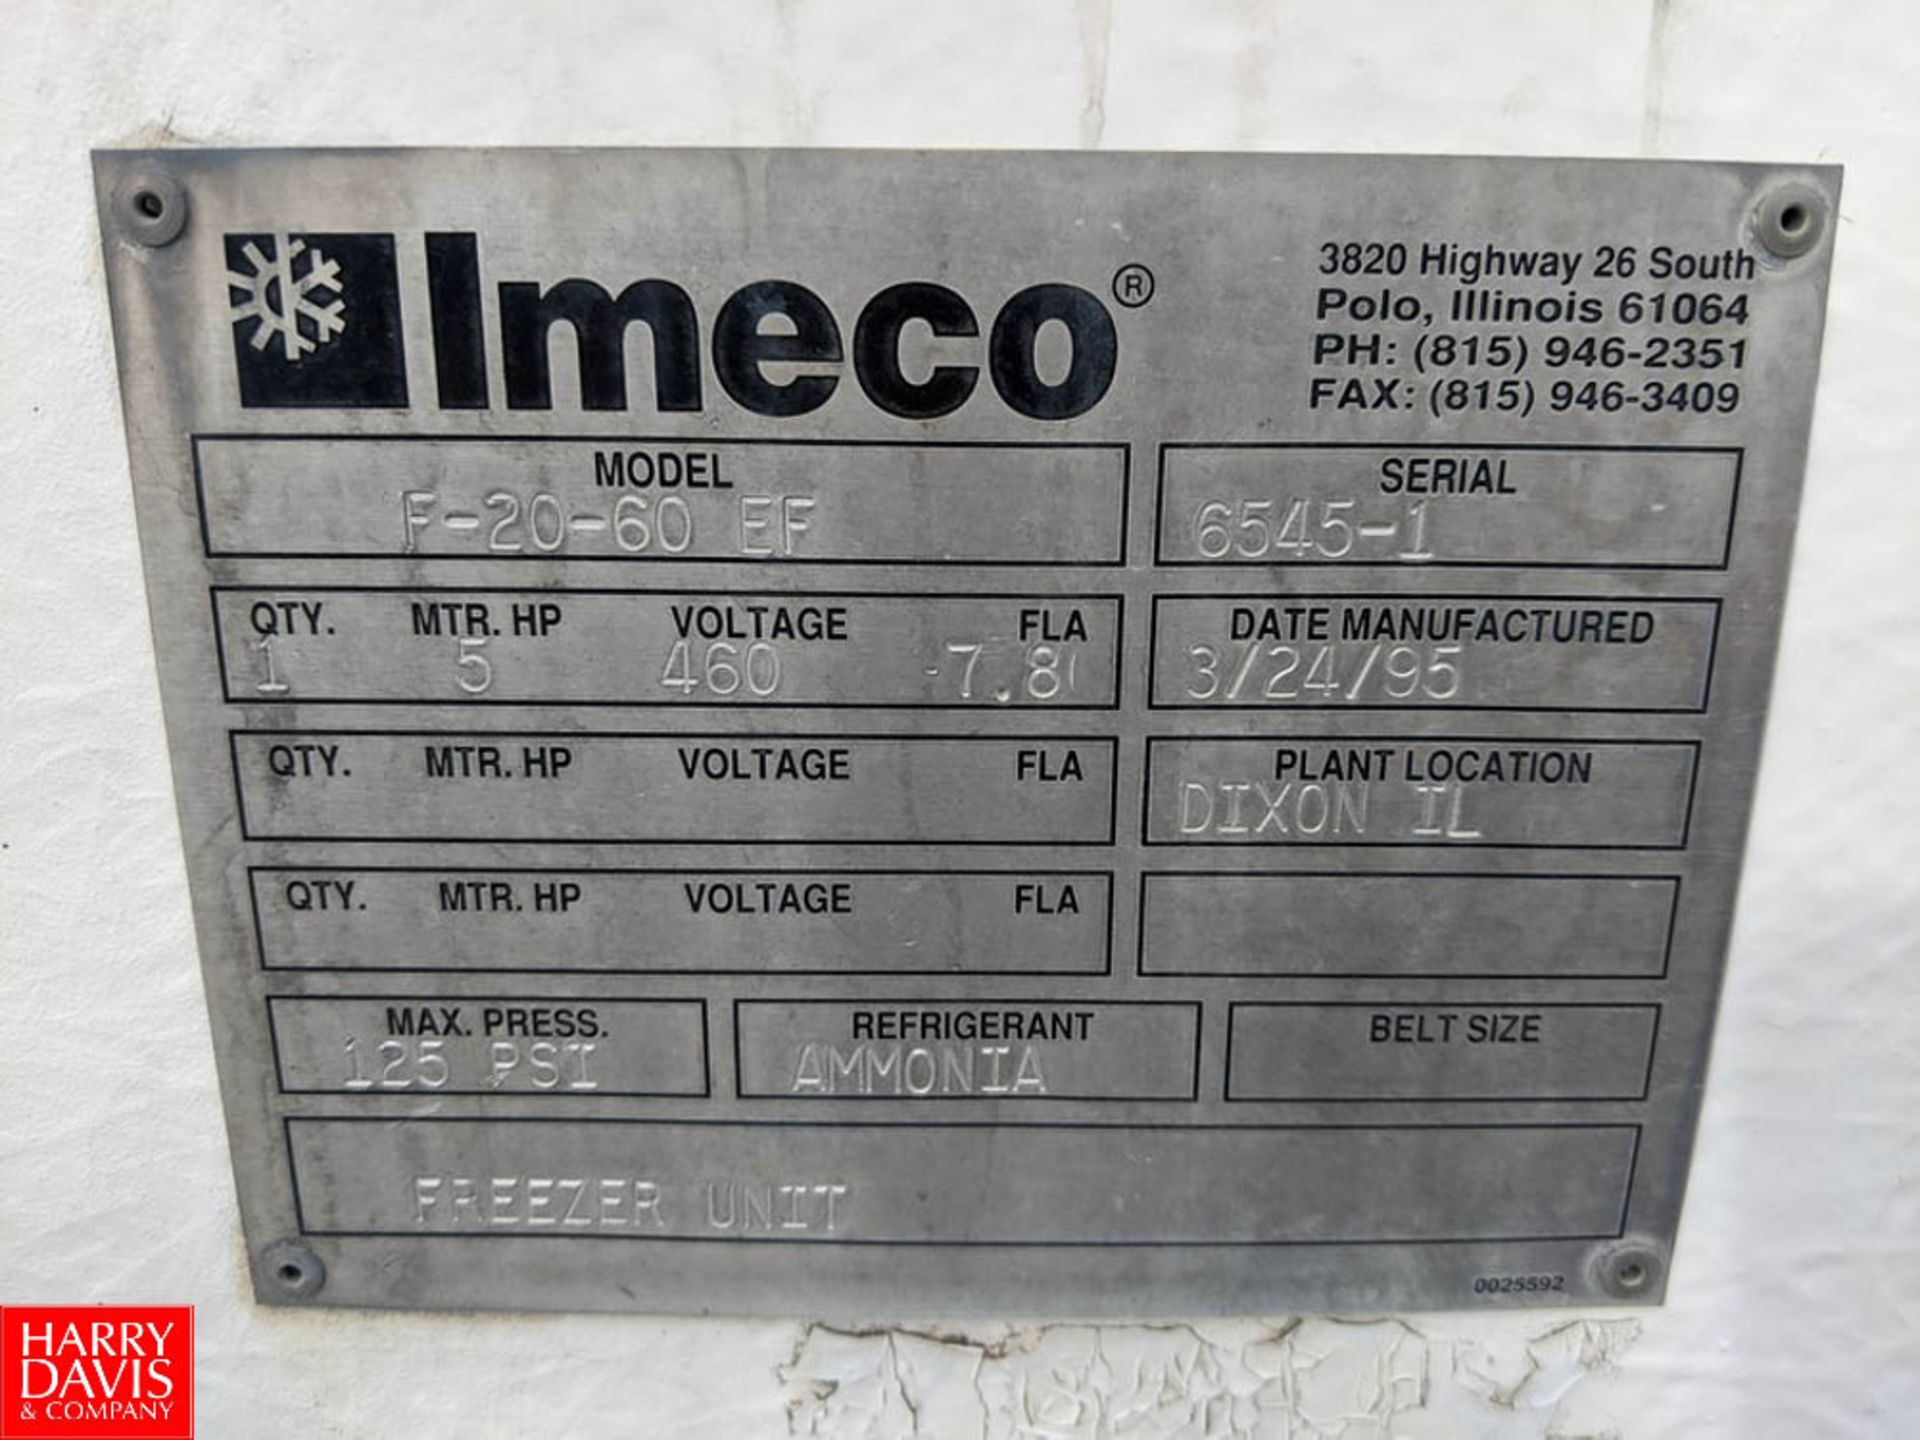 Imeco Evaporative Freezer Blower Model F-20-60 EF : SN 6545-3 Rigging Fee: $700 - Image 2 of 2